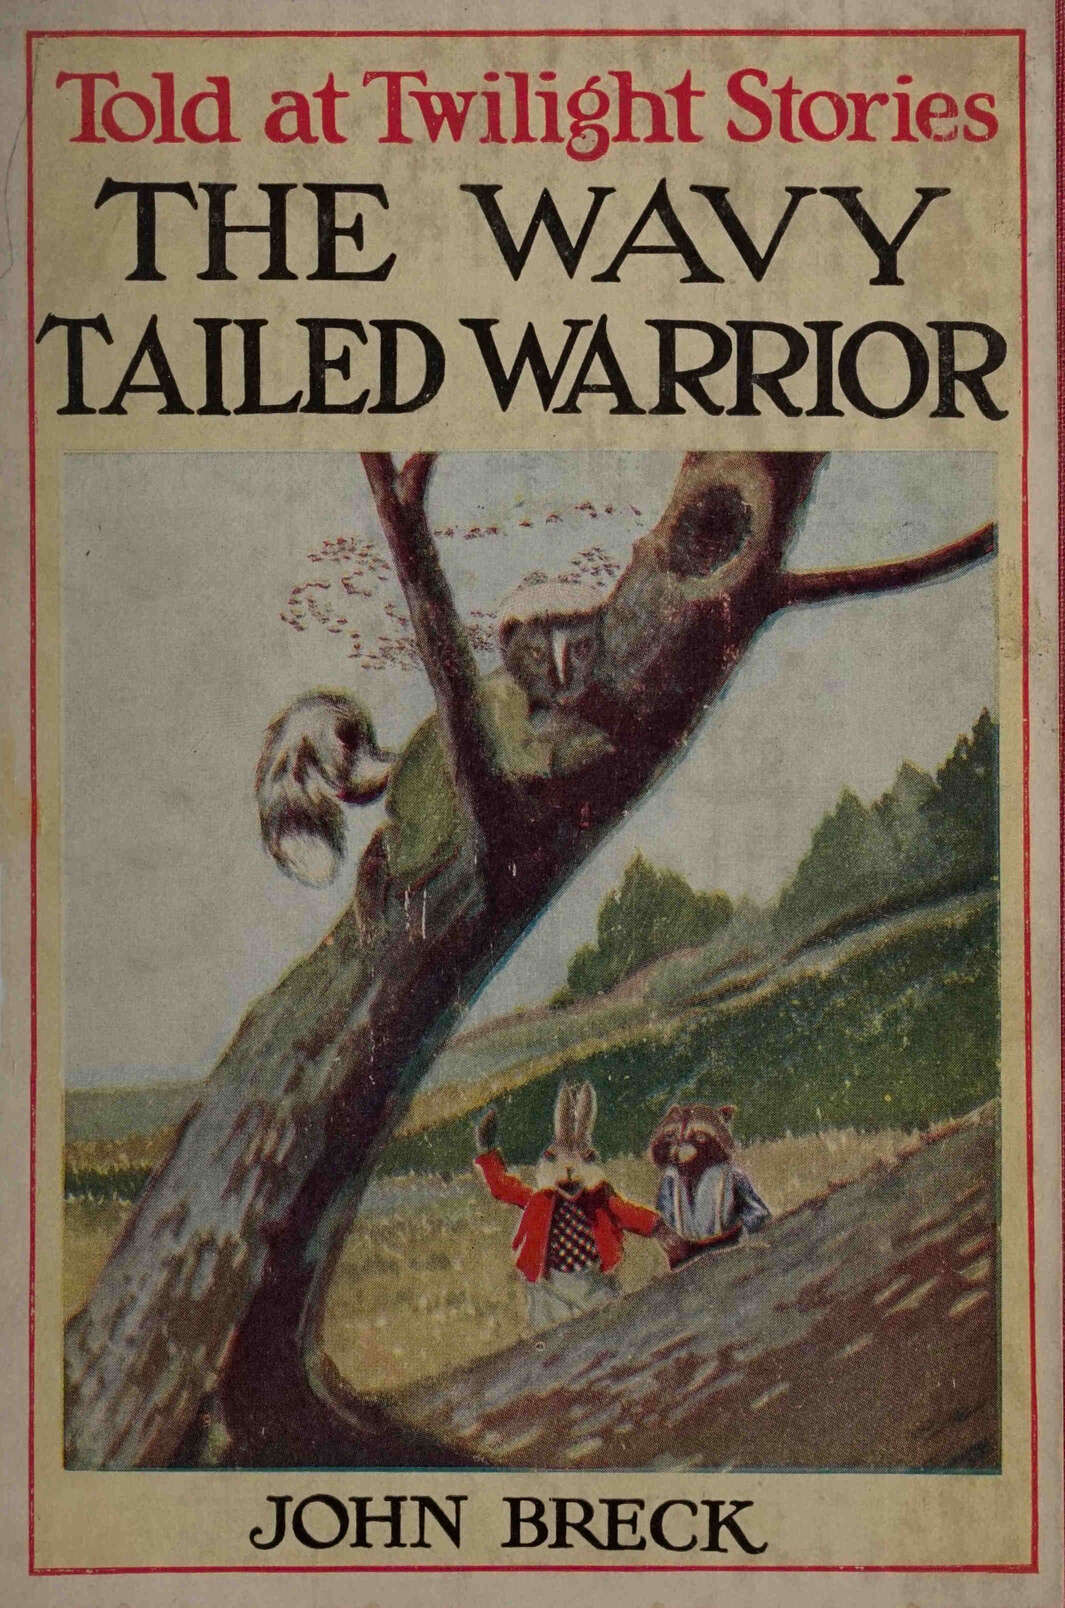 The Wavy Tailed Warrior